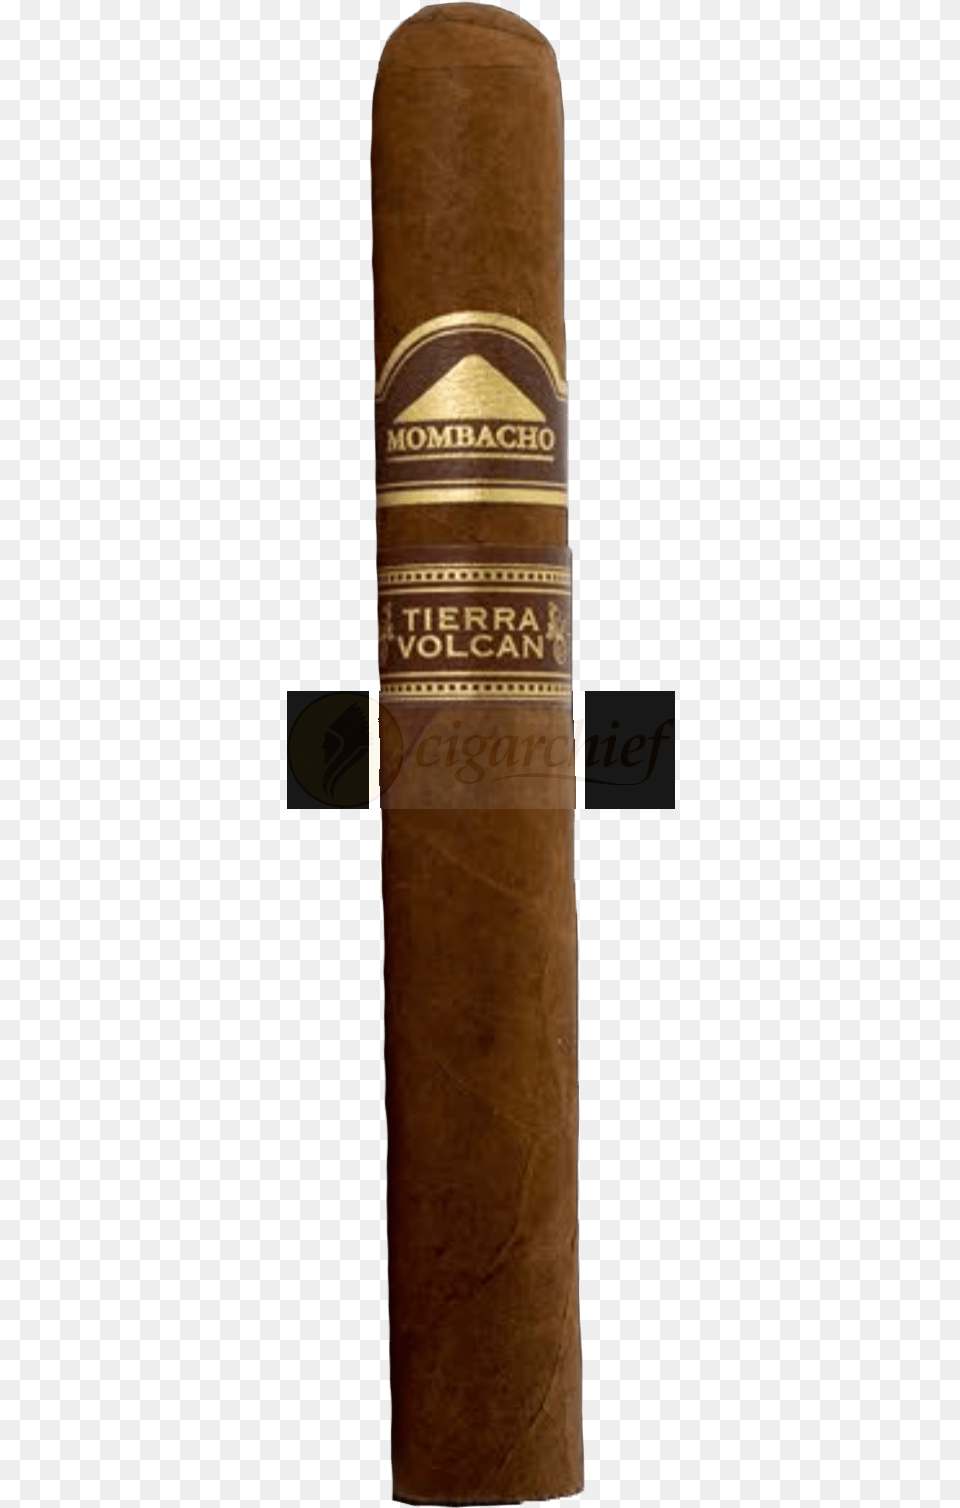 Mombacho Cigars Tierra Volcan Grande Single Cigar Wood, Weapon, Mortar Shell Png